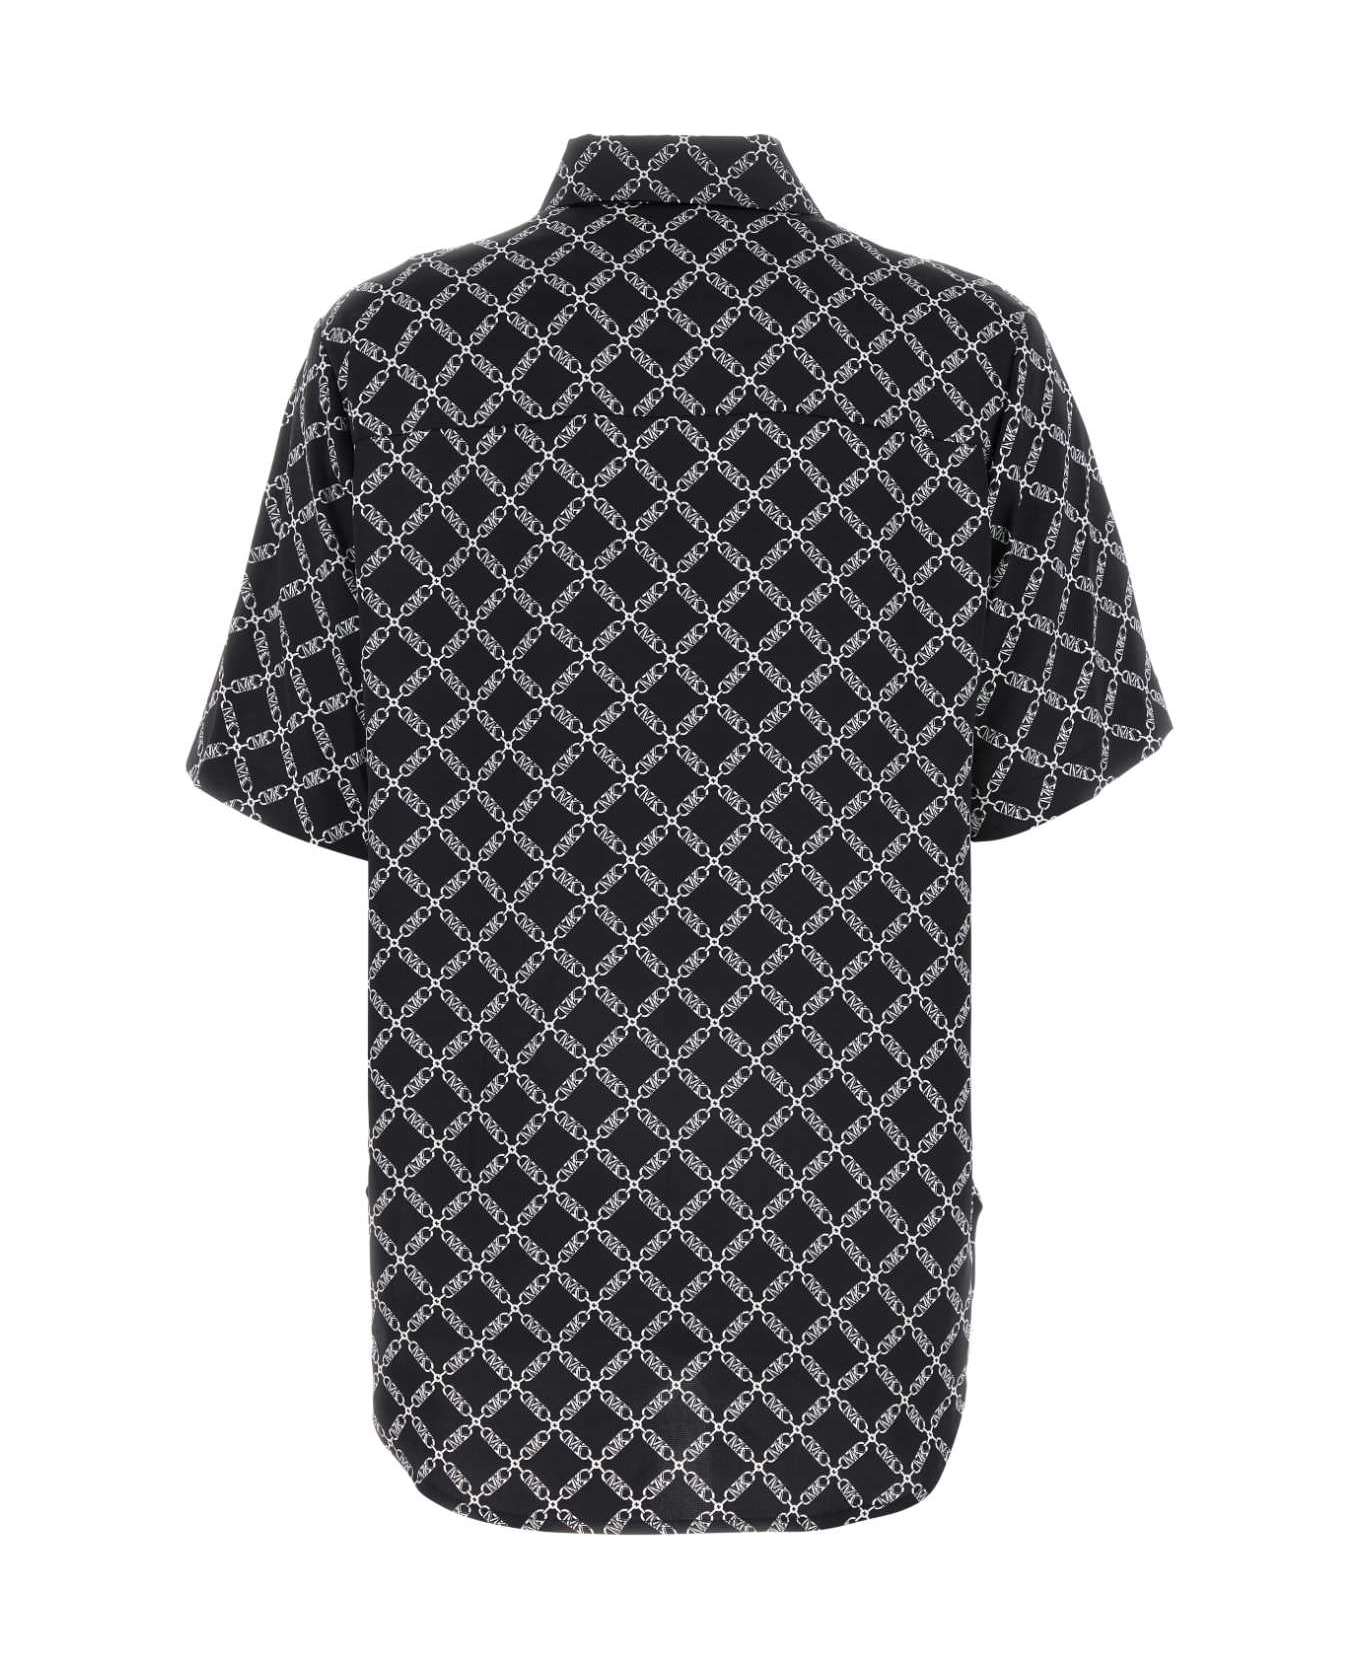 Michael Kors Printed Satin Shirt - BLACKWHITE